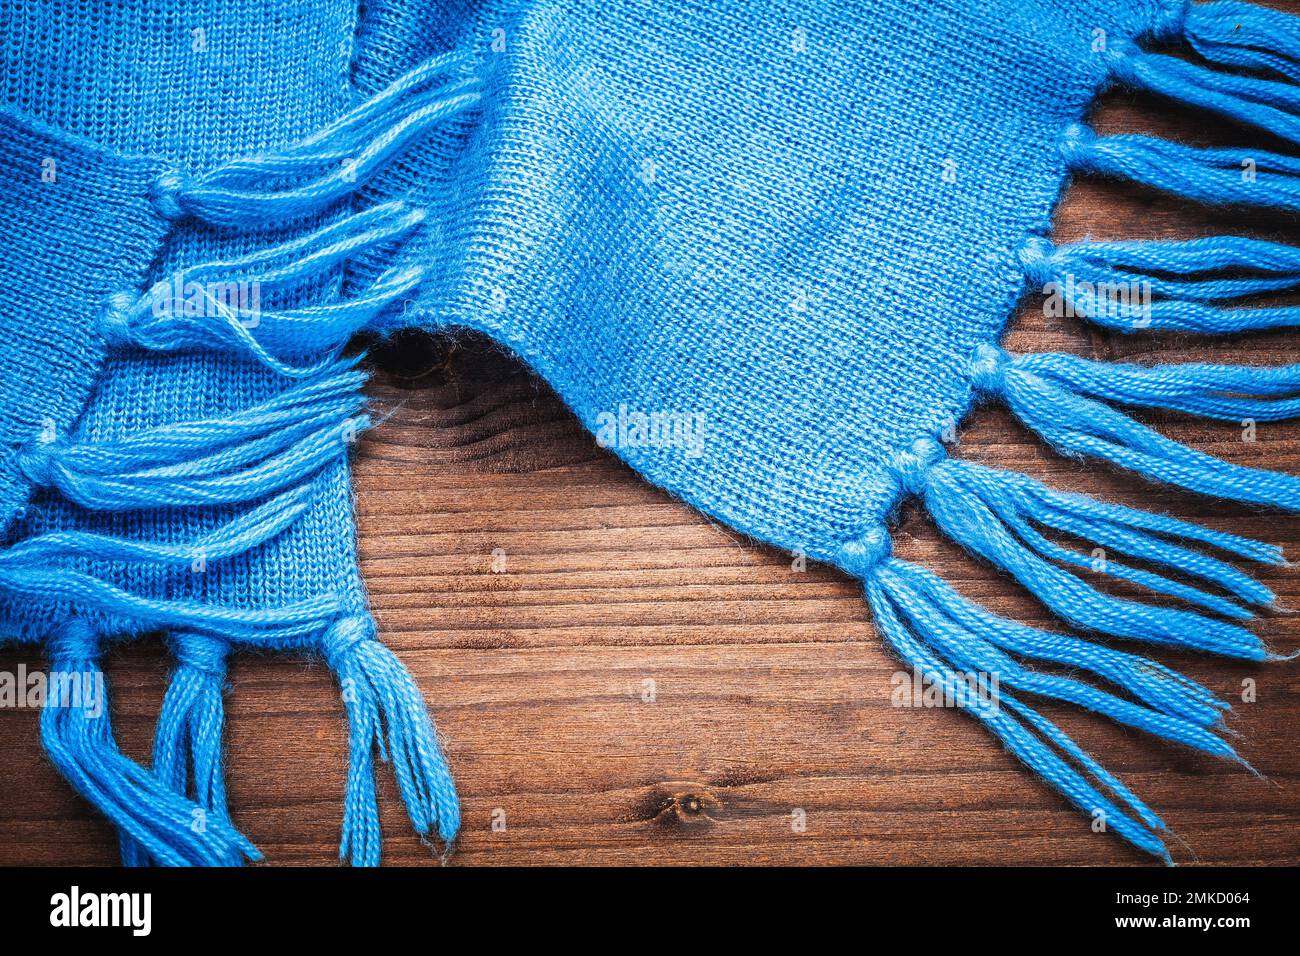 Sky blue winter warm scarf on wood Stock Photo